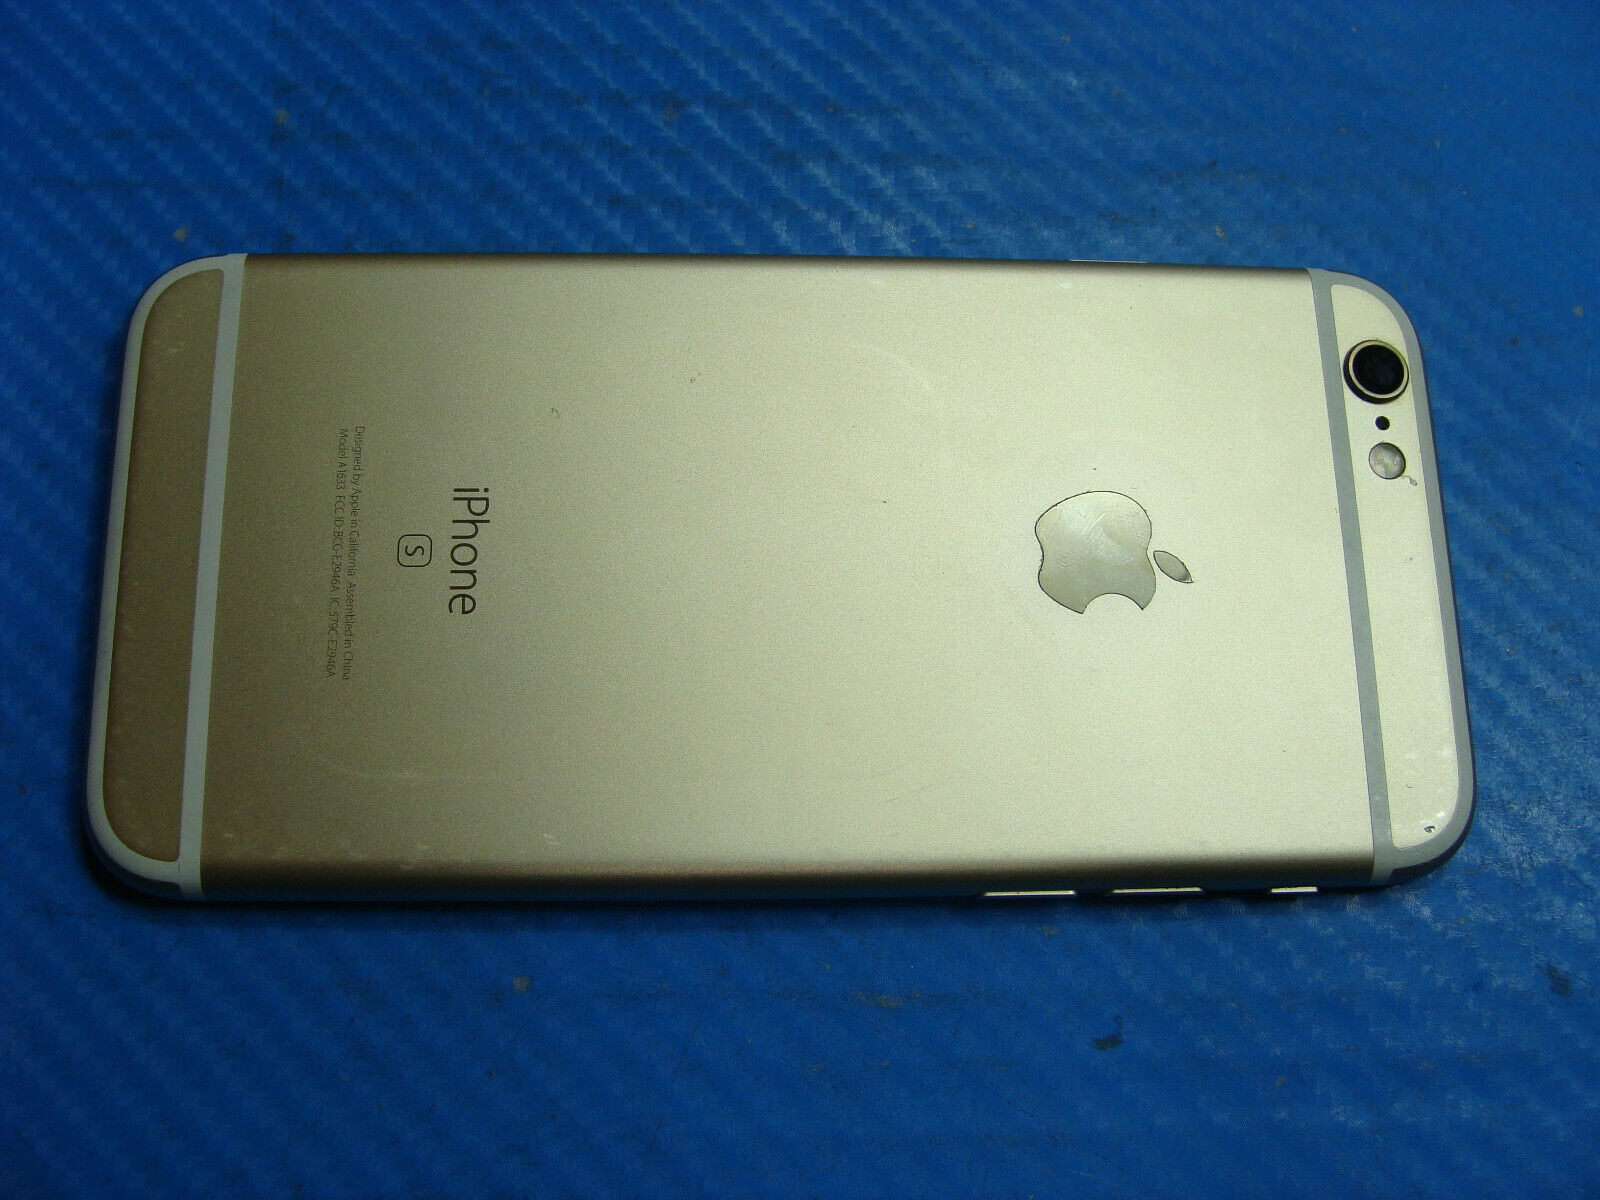 iphone model a1633 fcc id bcg-e2946a